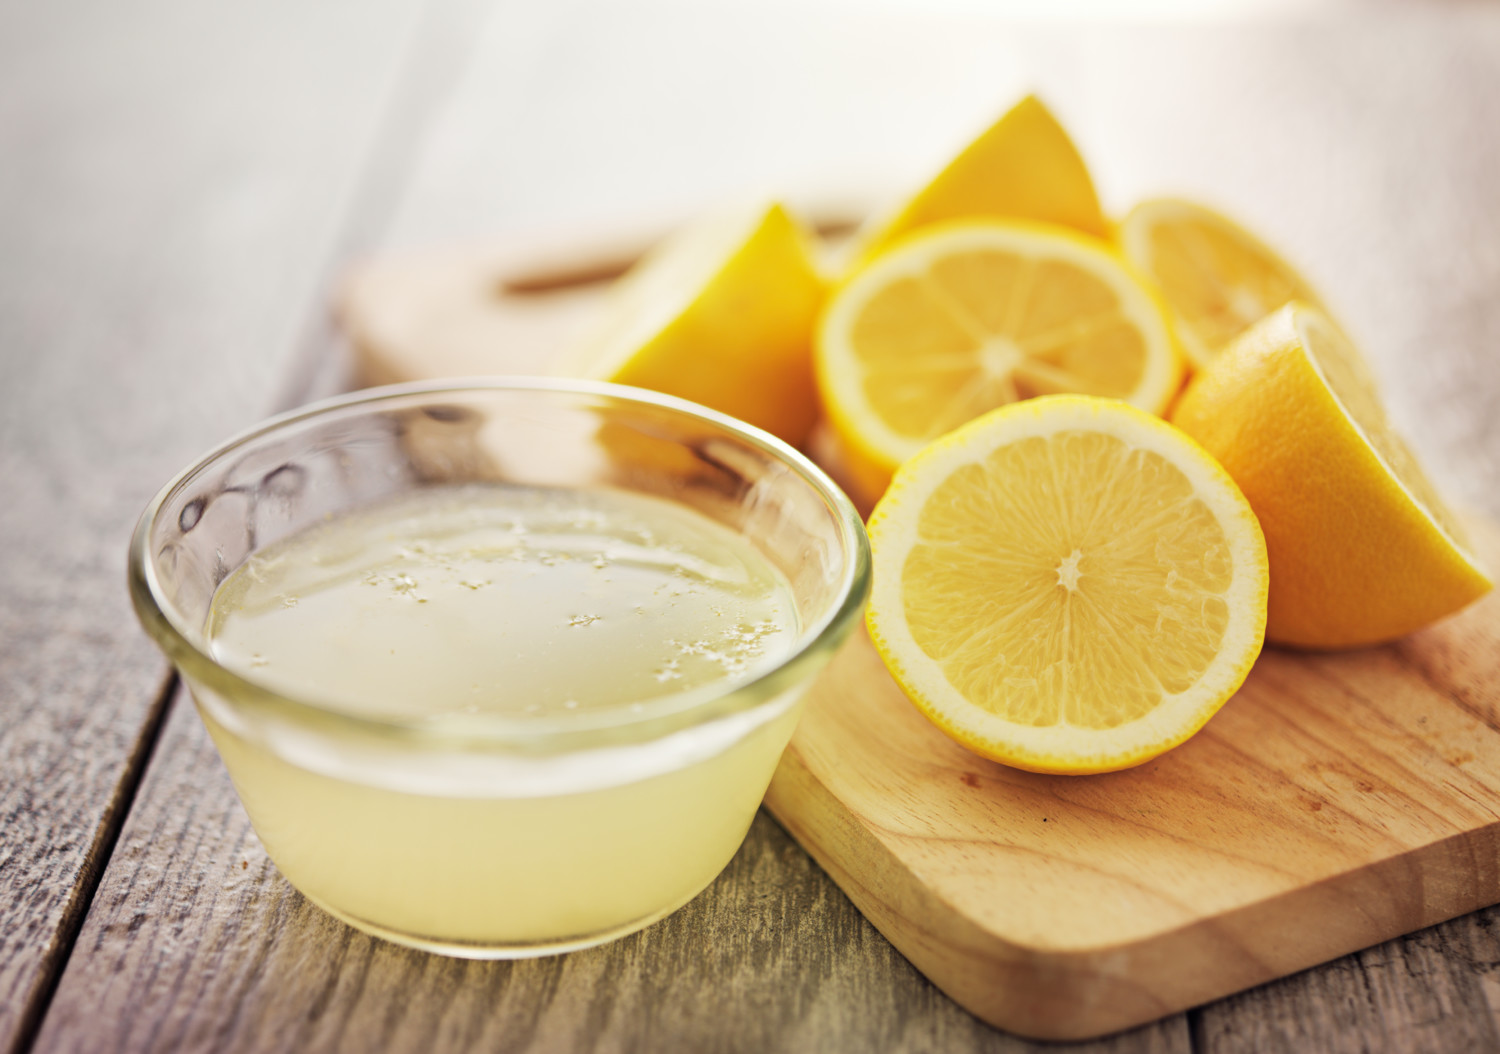 Lemons and freshly squeezed lemon juice